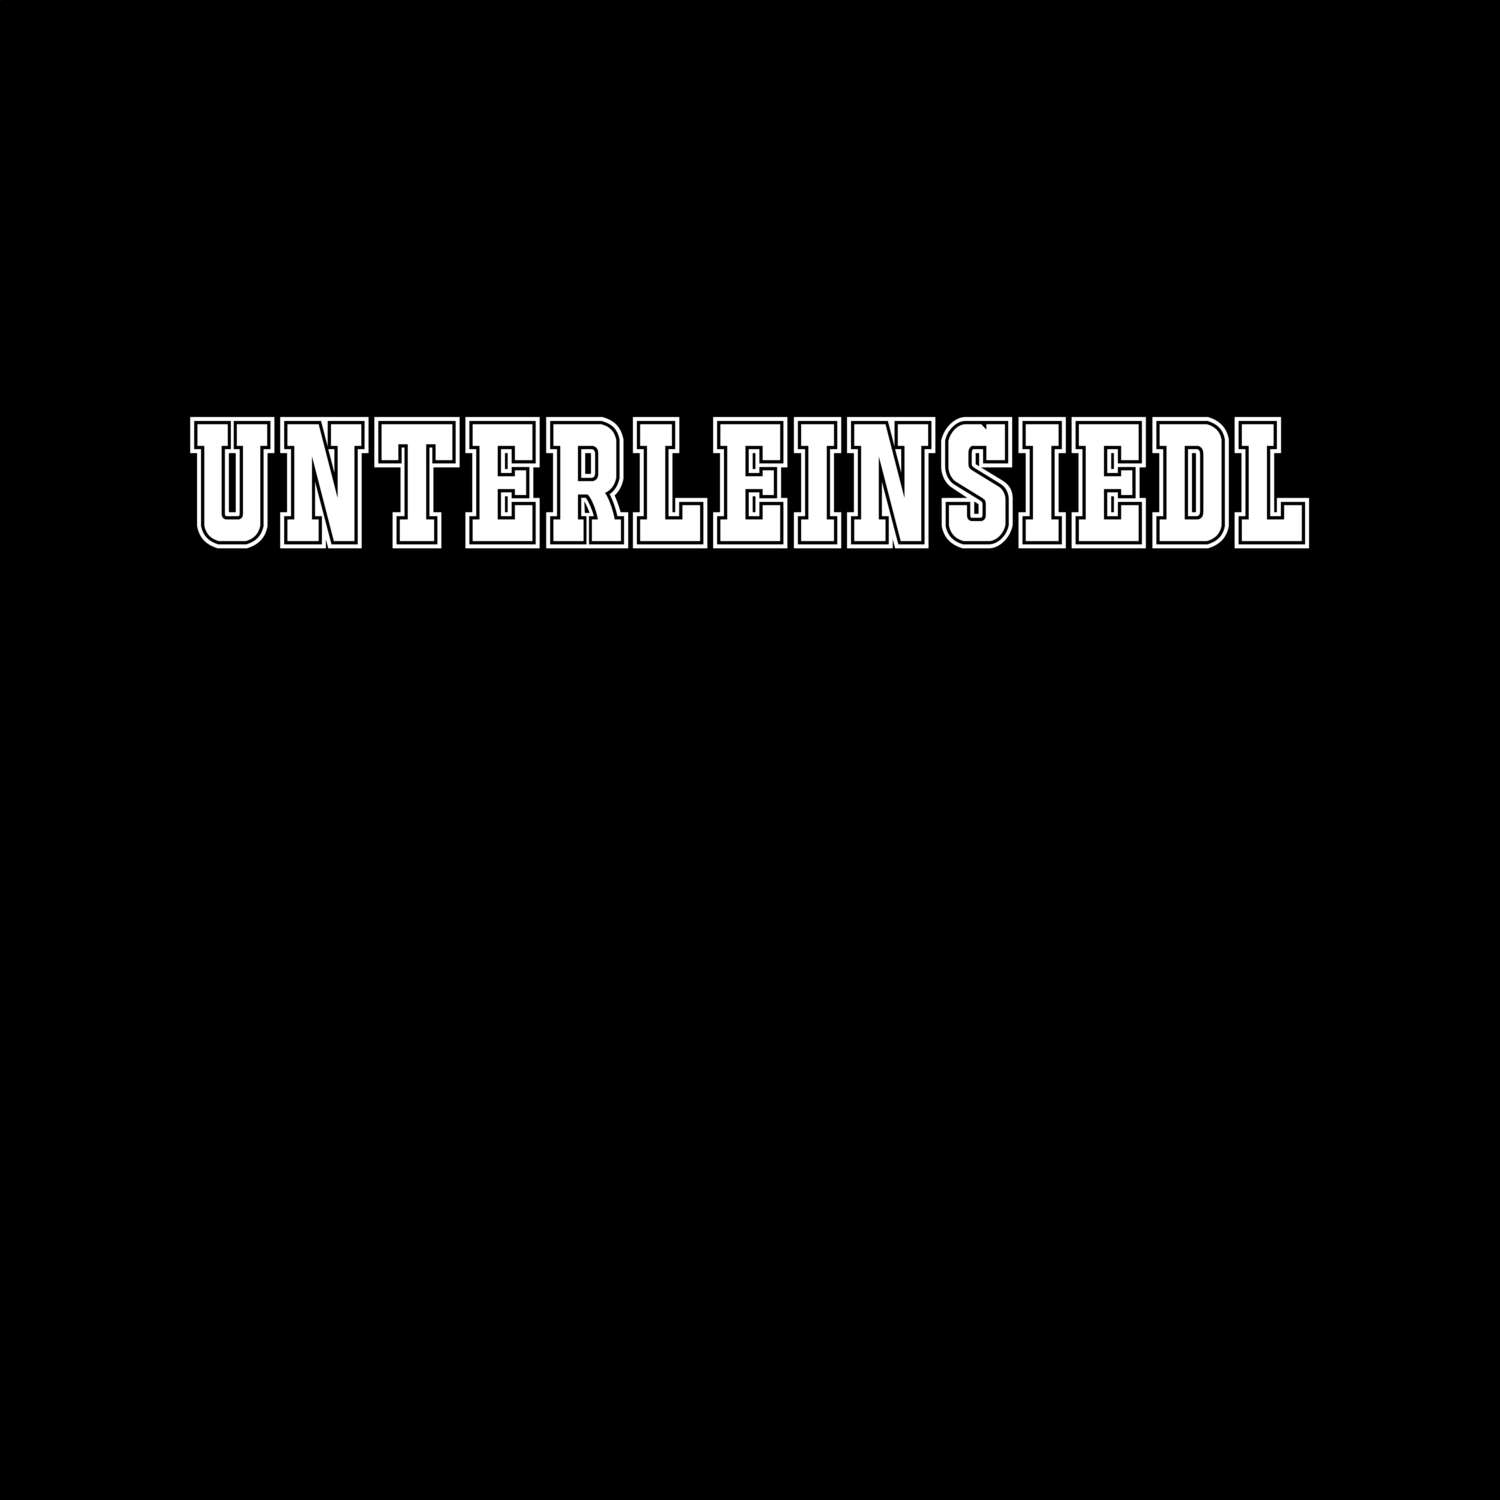 Unterleinsiedl T-Shirt »Classic«